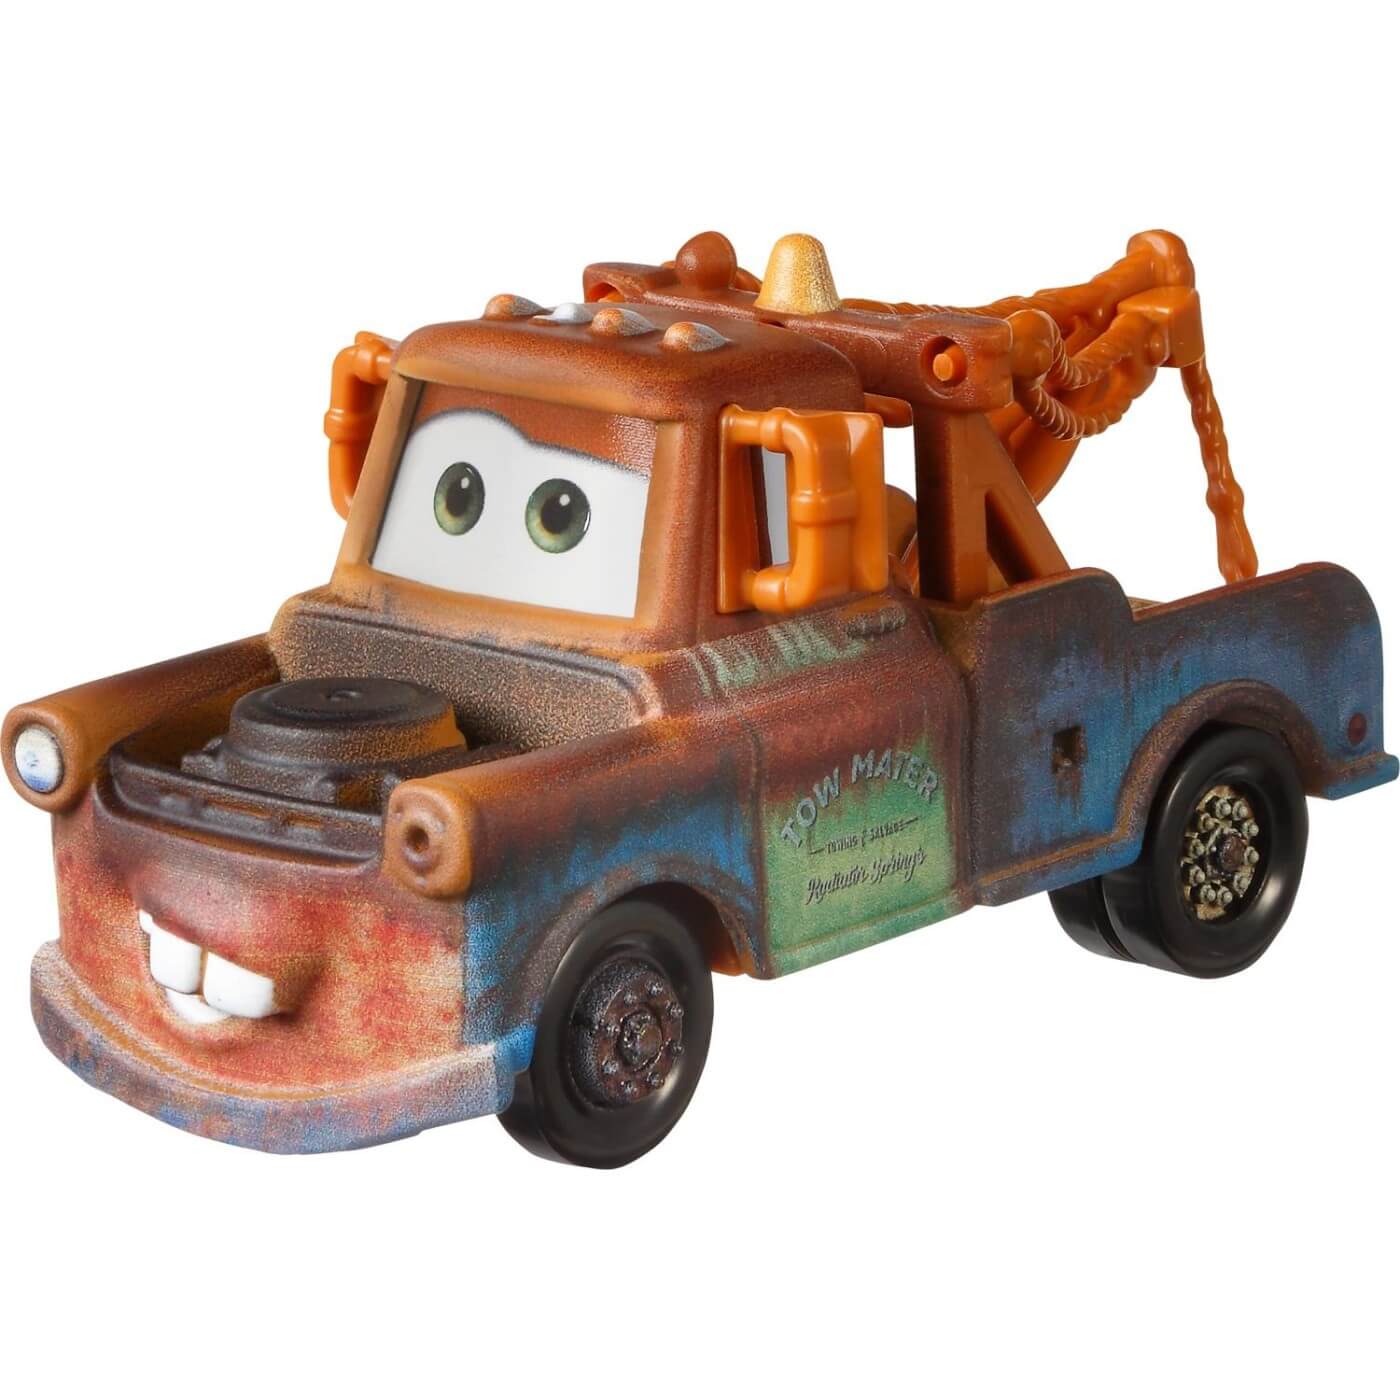 Disney Pixar Cars Mater 1:55 Scale Vehicle